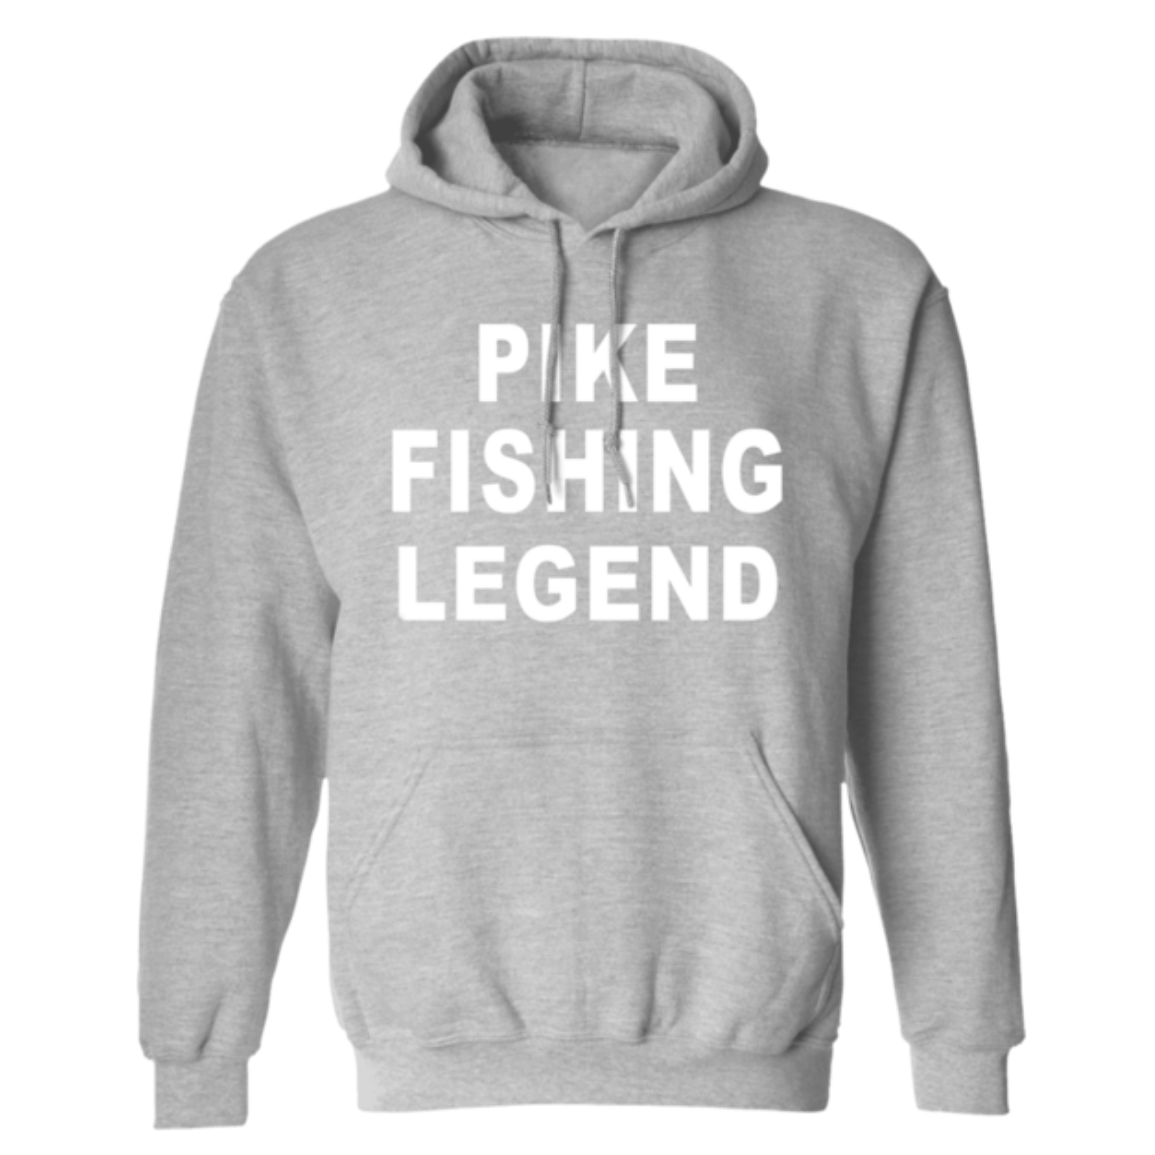 Pike fishing legend hoodie w sport-grey